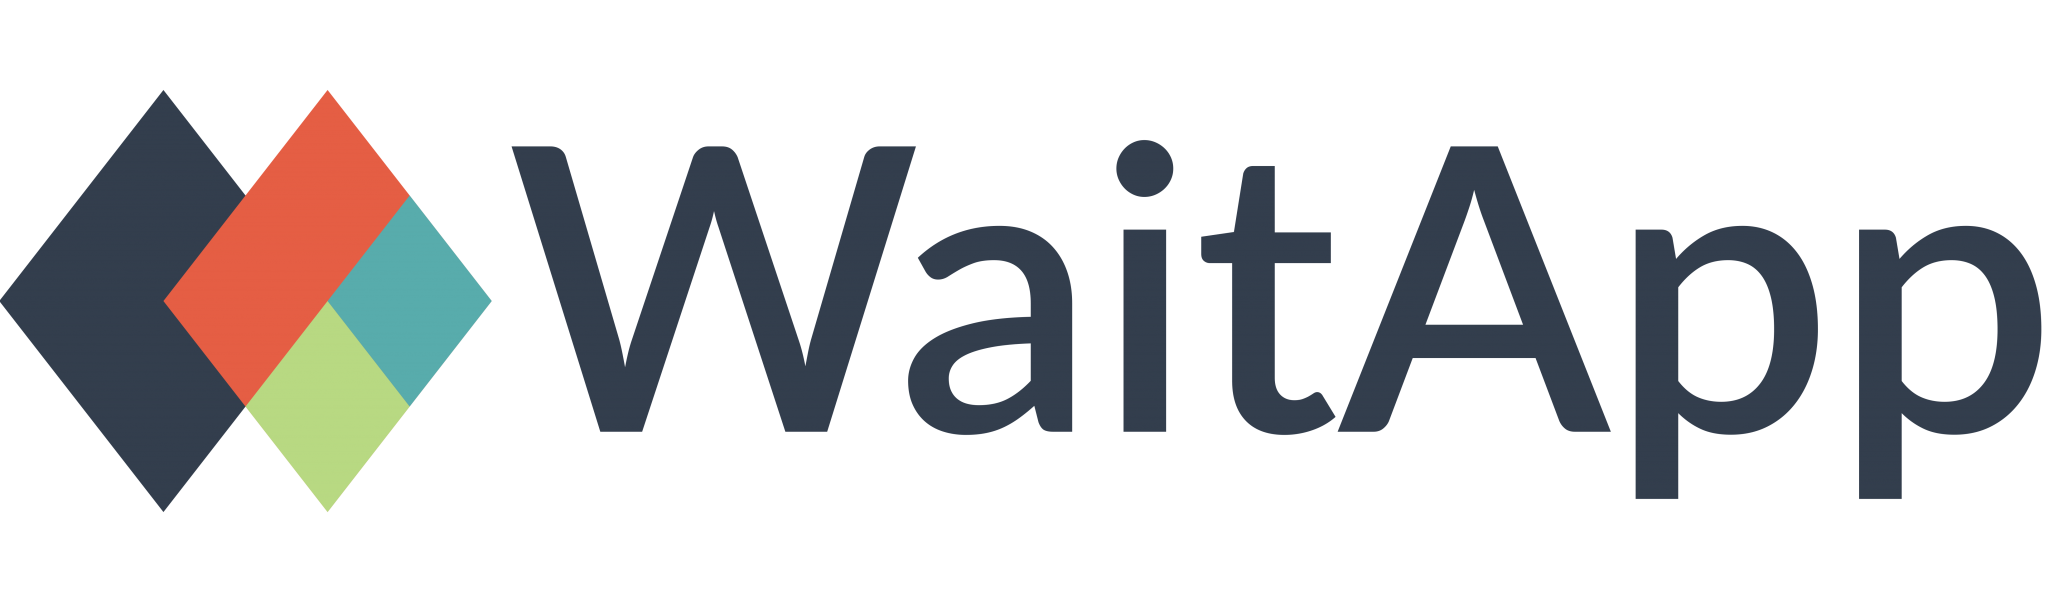 WaitApp | Digital Signage Software